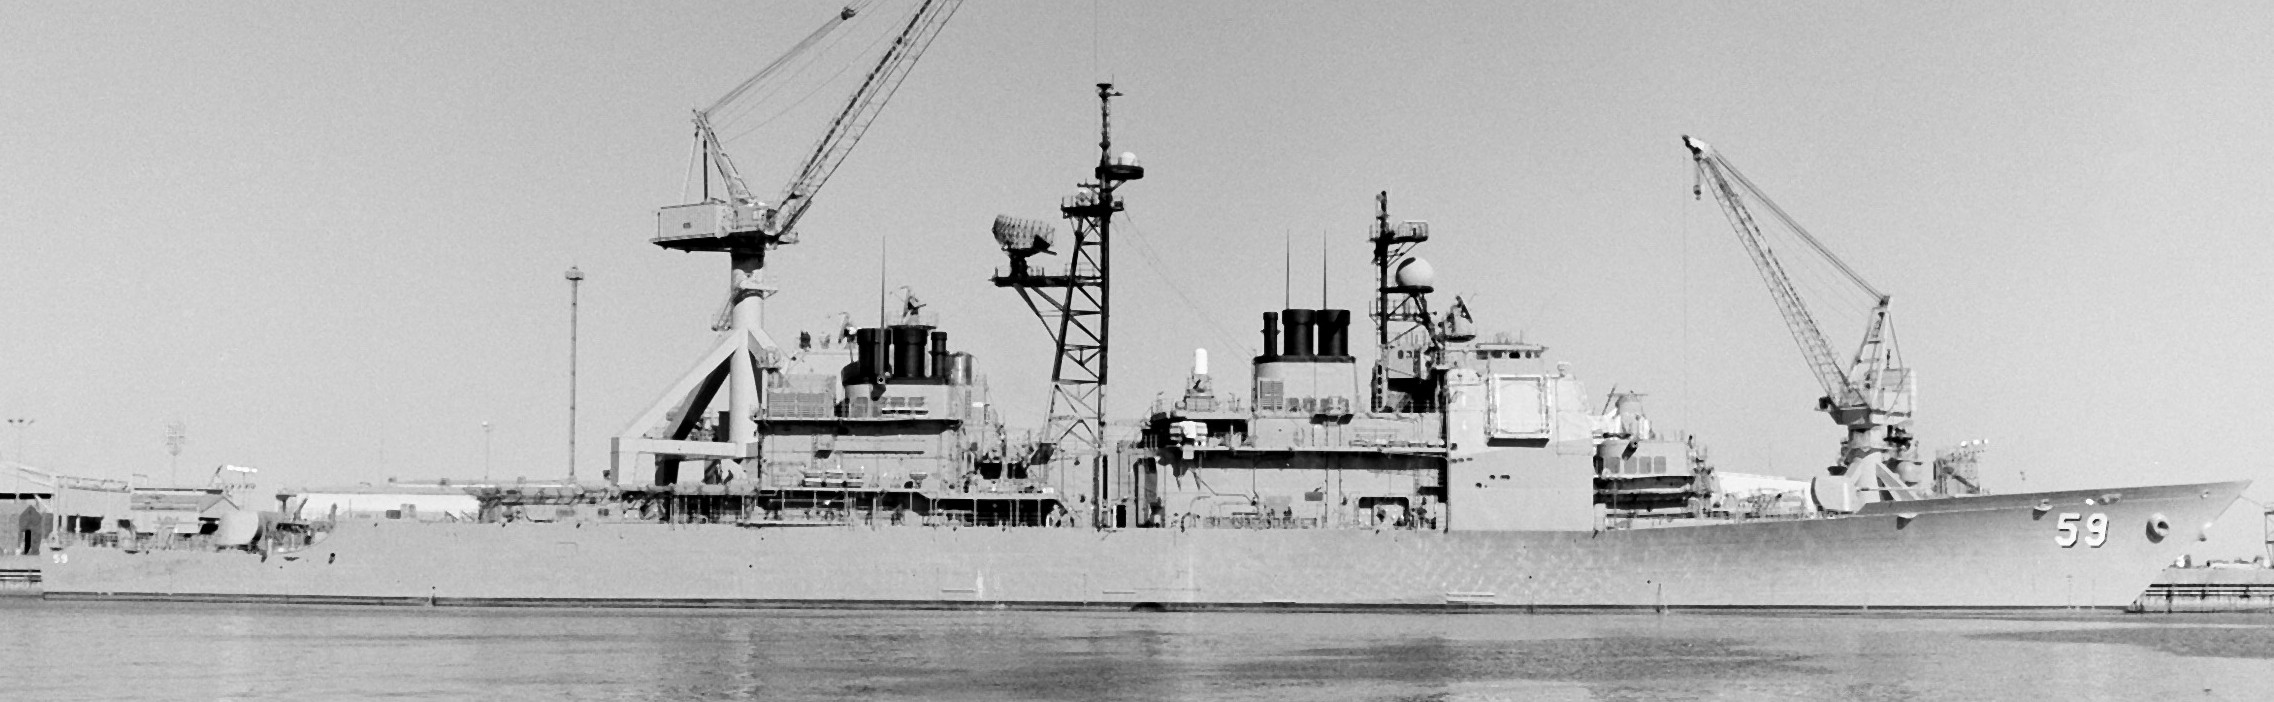 cg-59 uss princeton ticonderoga class guided missile cruiser aegis us navy ingalls shipbuilding pascagoula mississippi 115